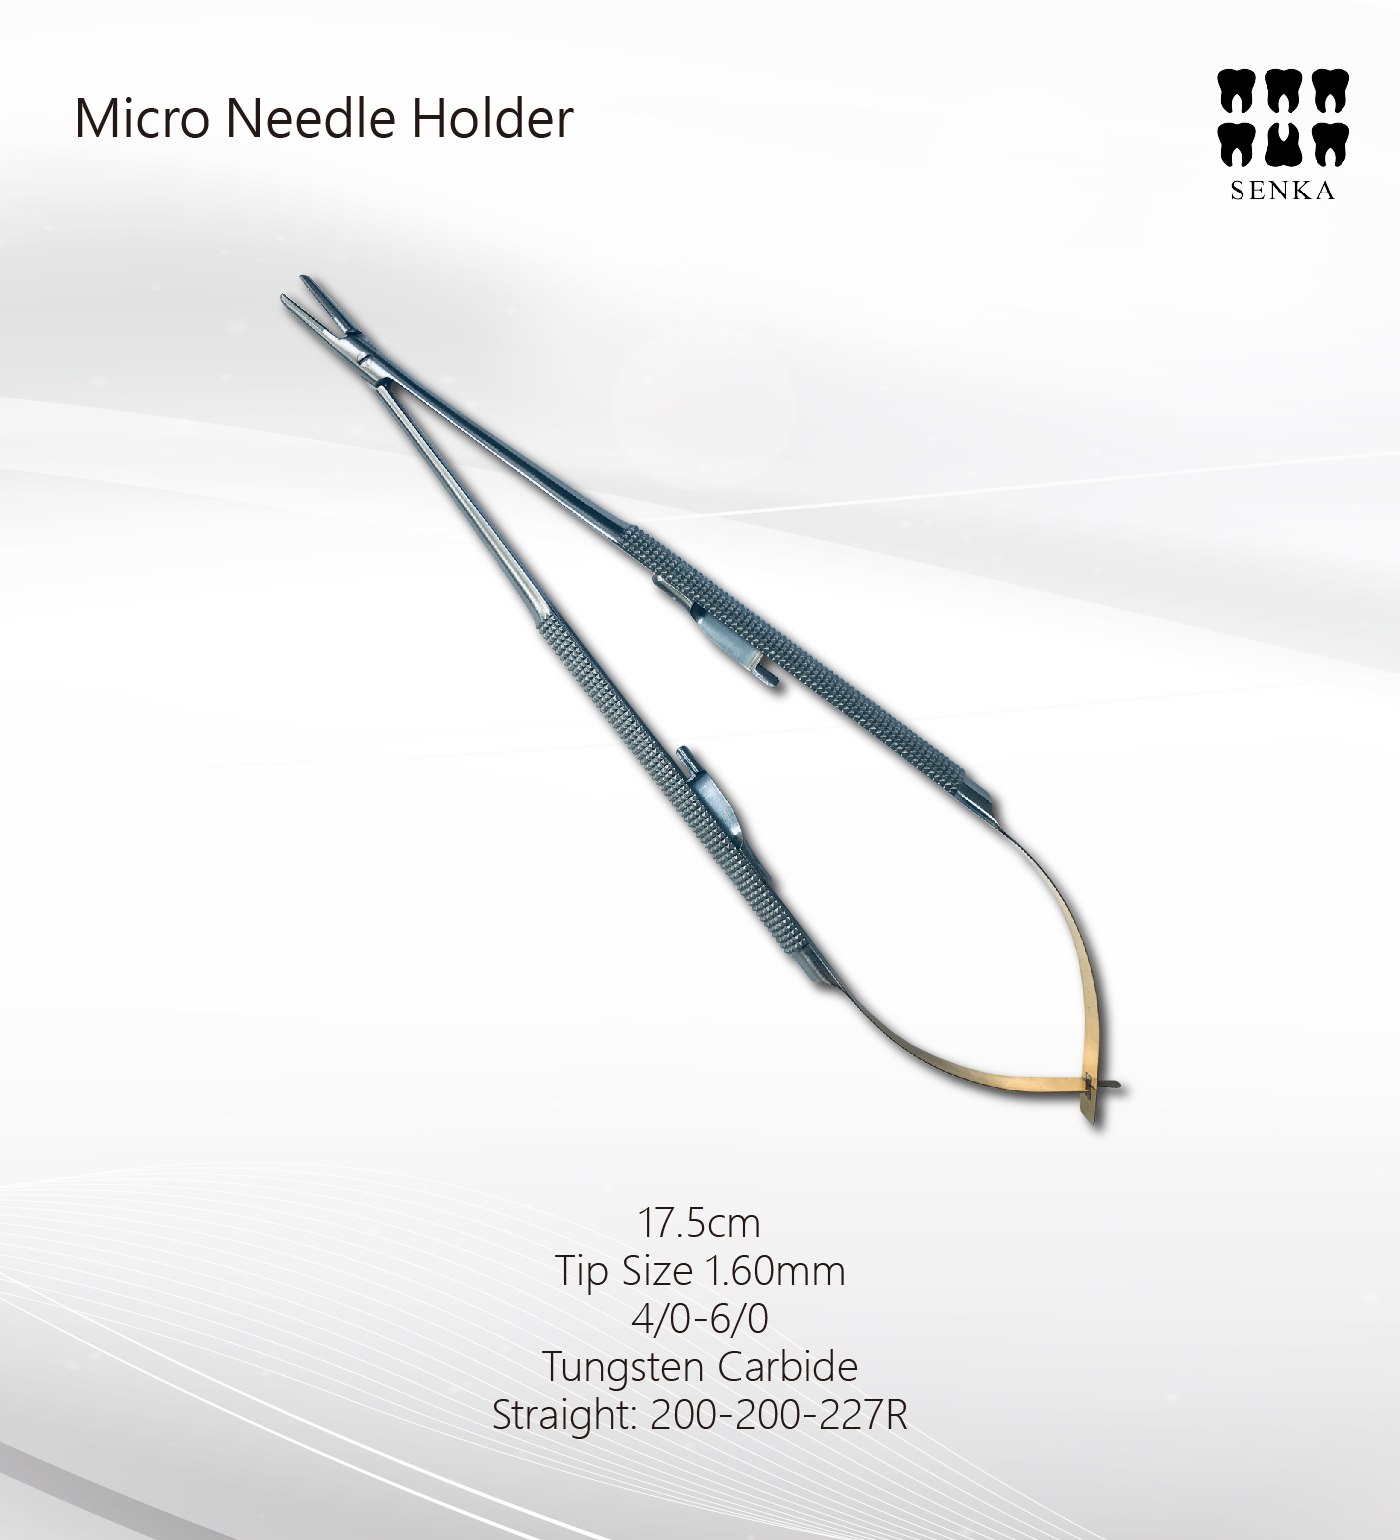 Micro Needle Holder content-06.jpg